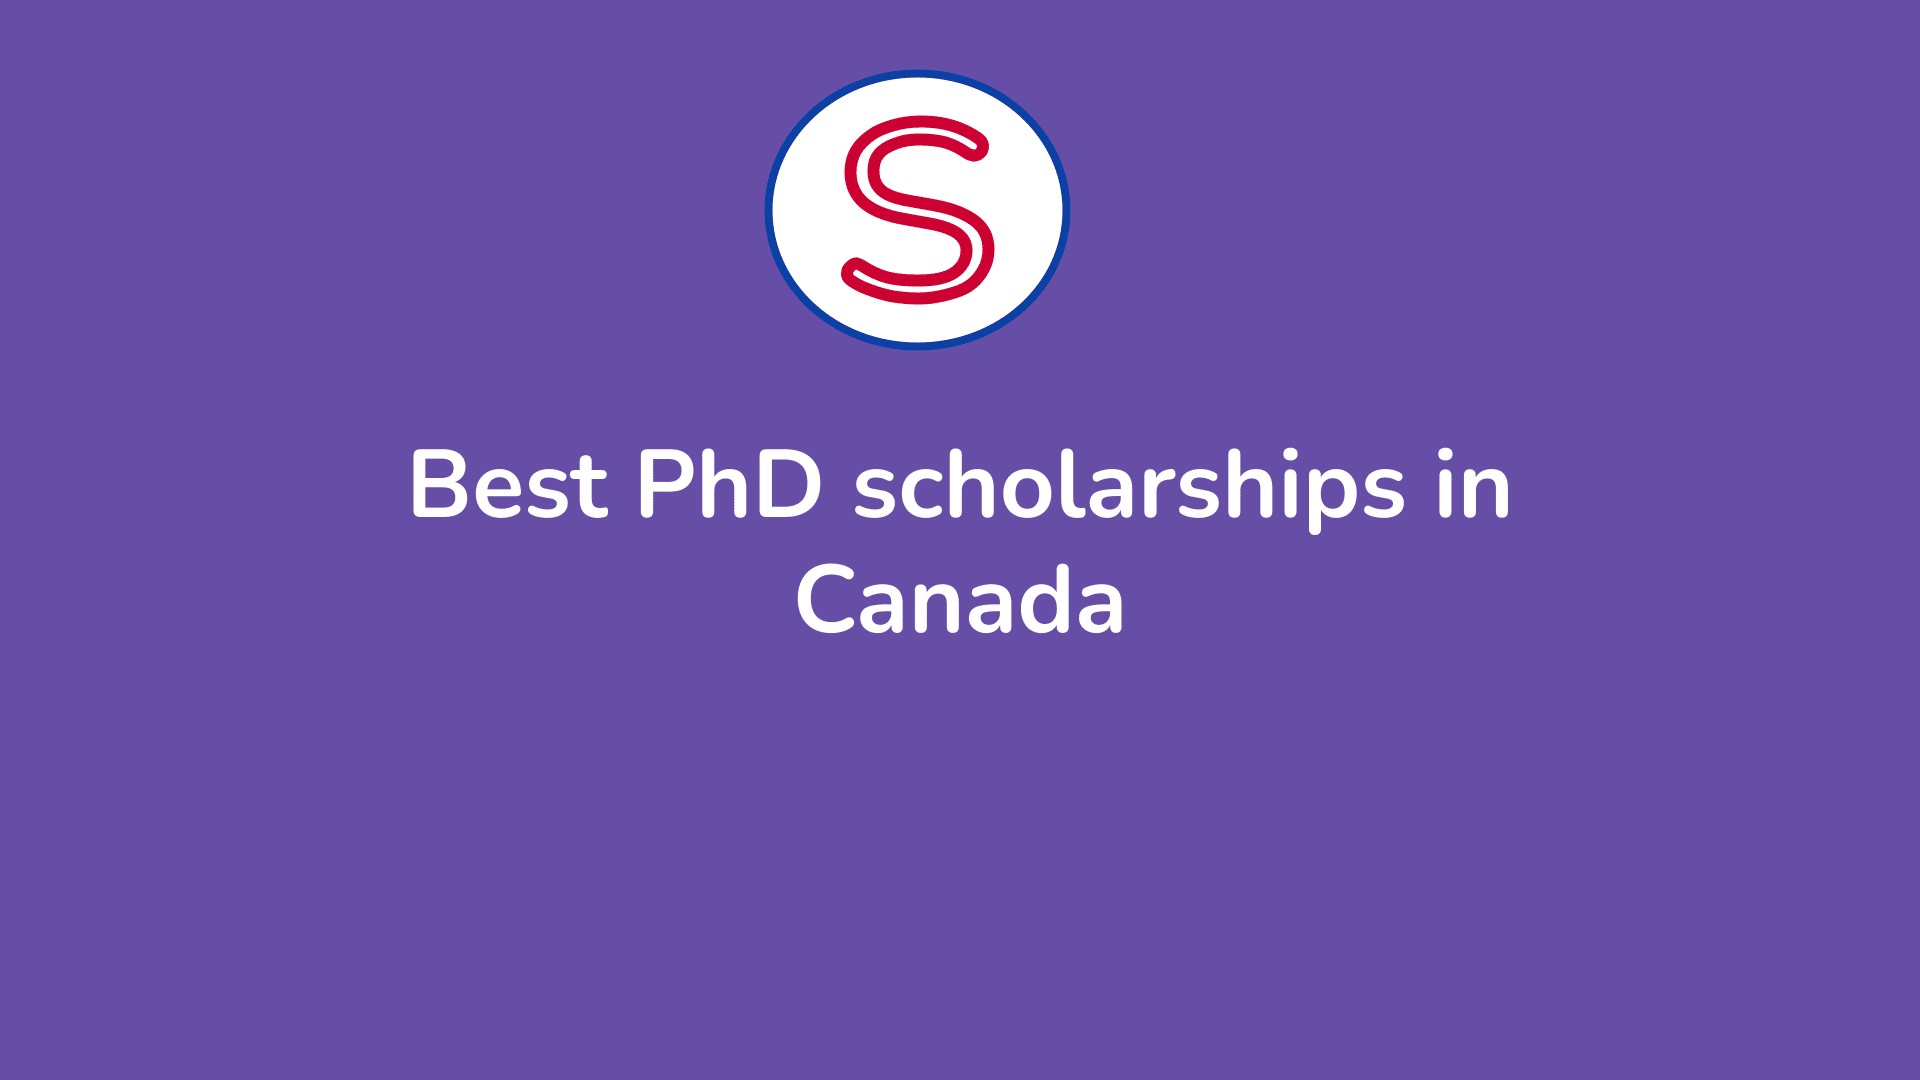 phd scholarships in canada